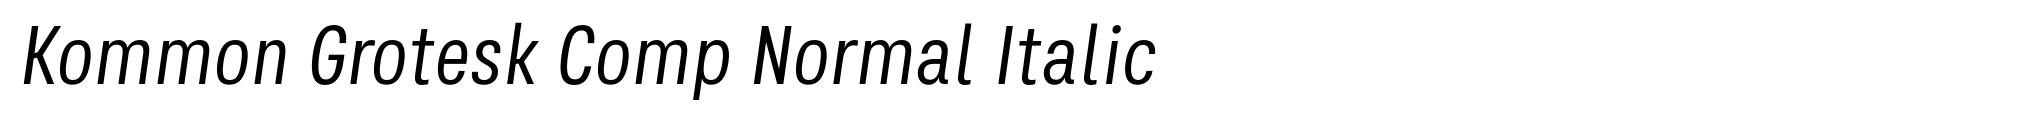 Kommon Grotesk Comp Normal Italic image